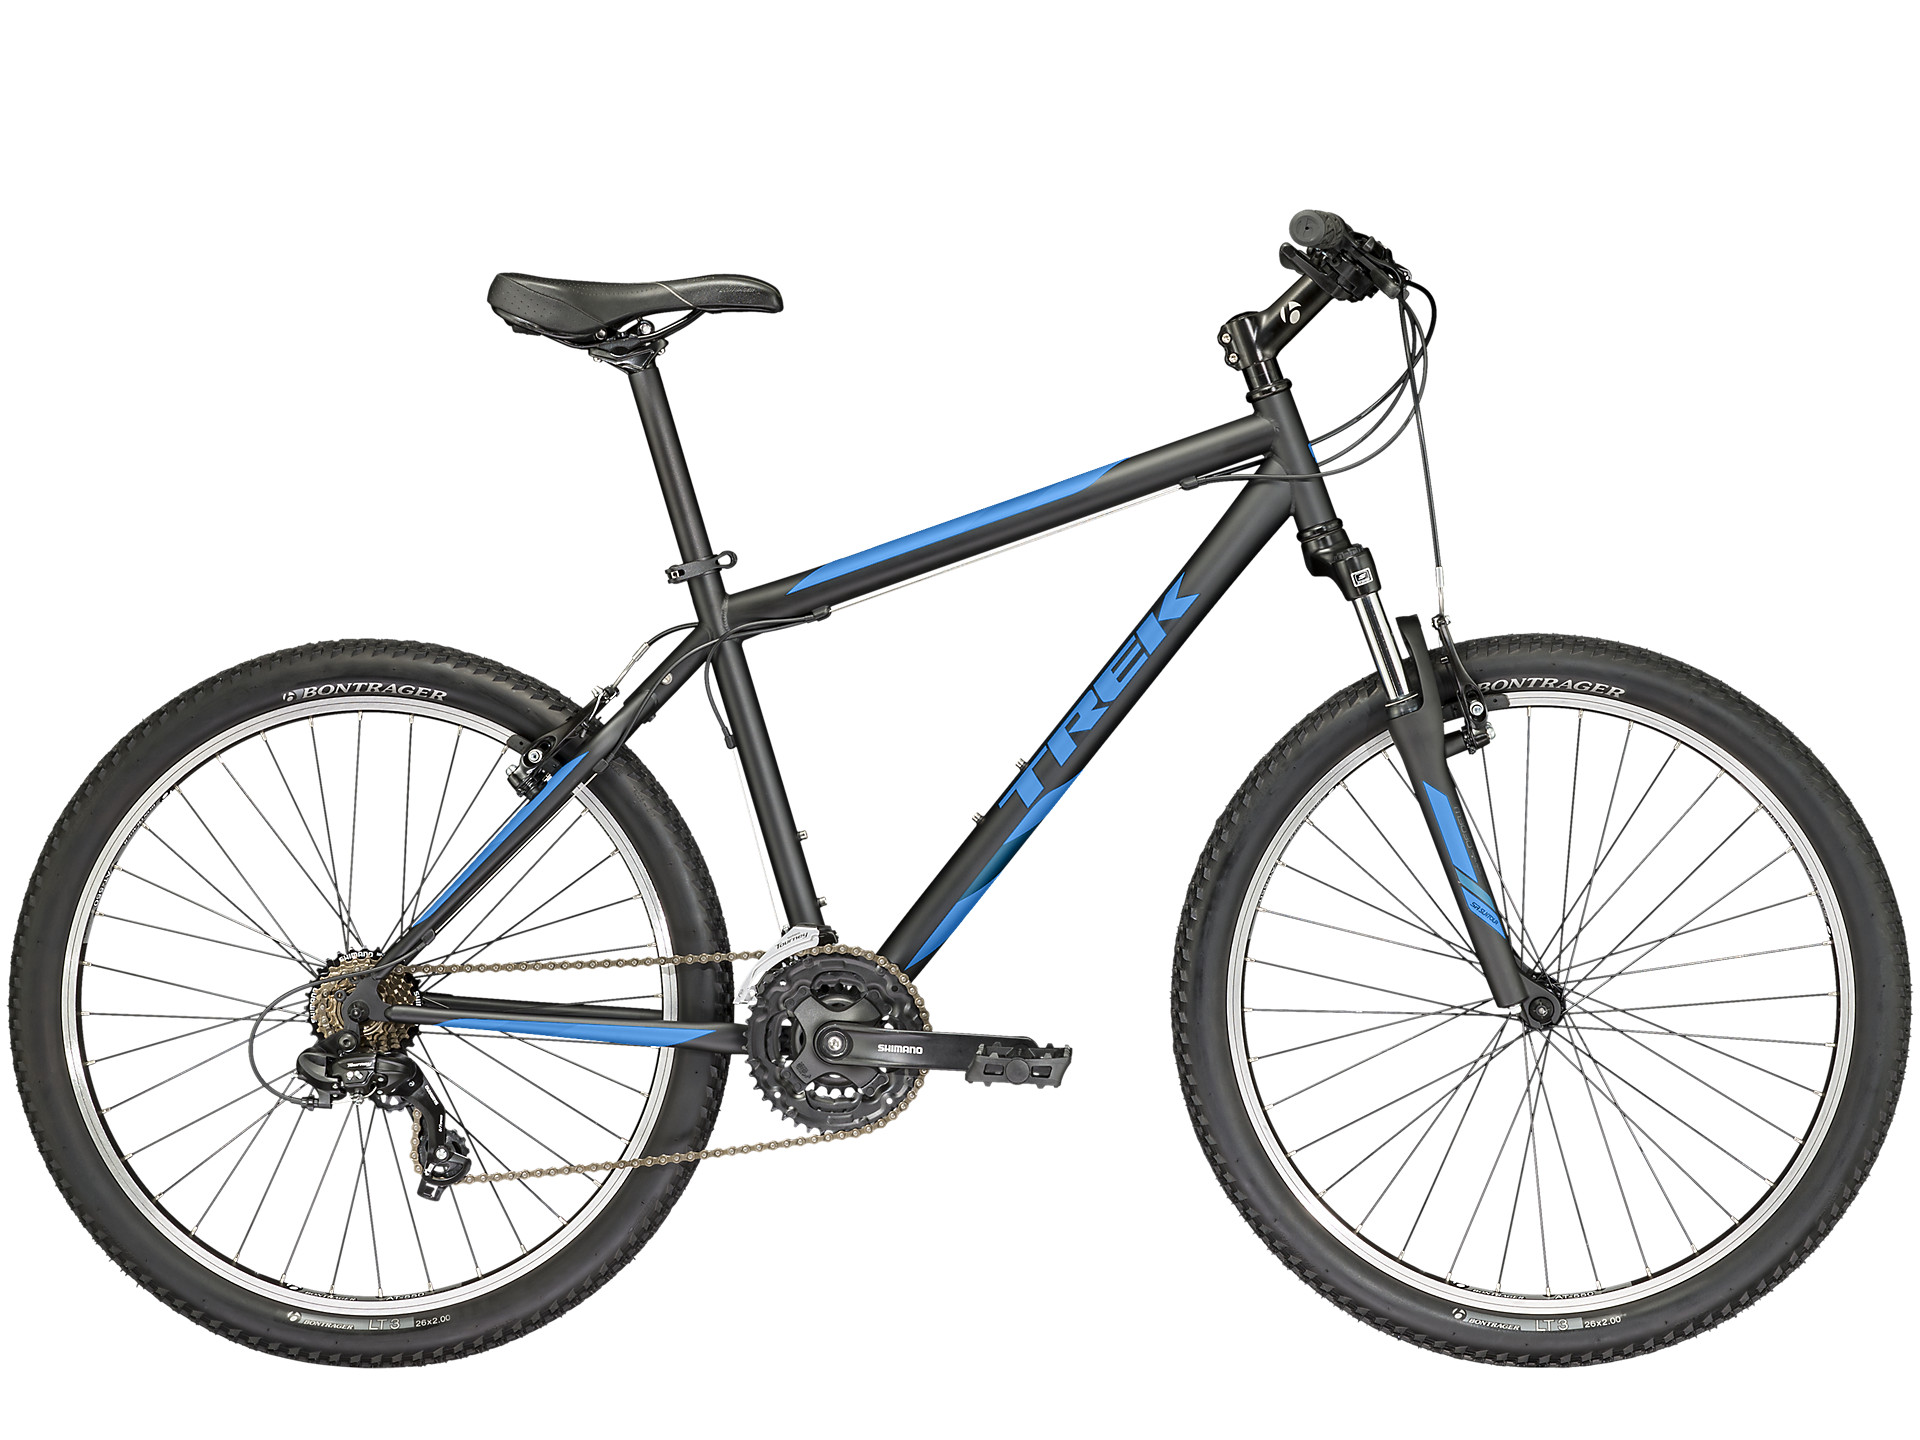 Black/blue Trek 820″ mountain bike with rim brakes